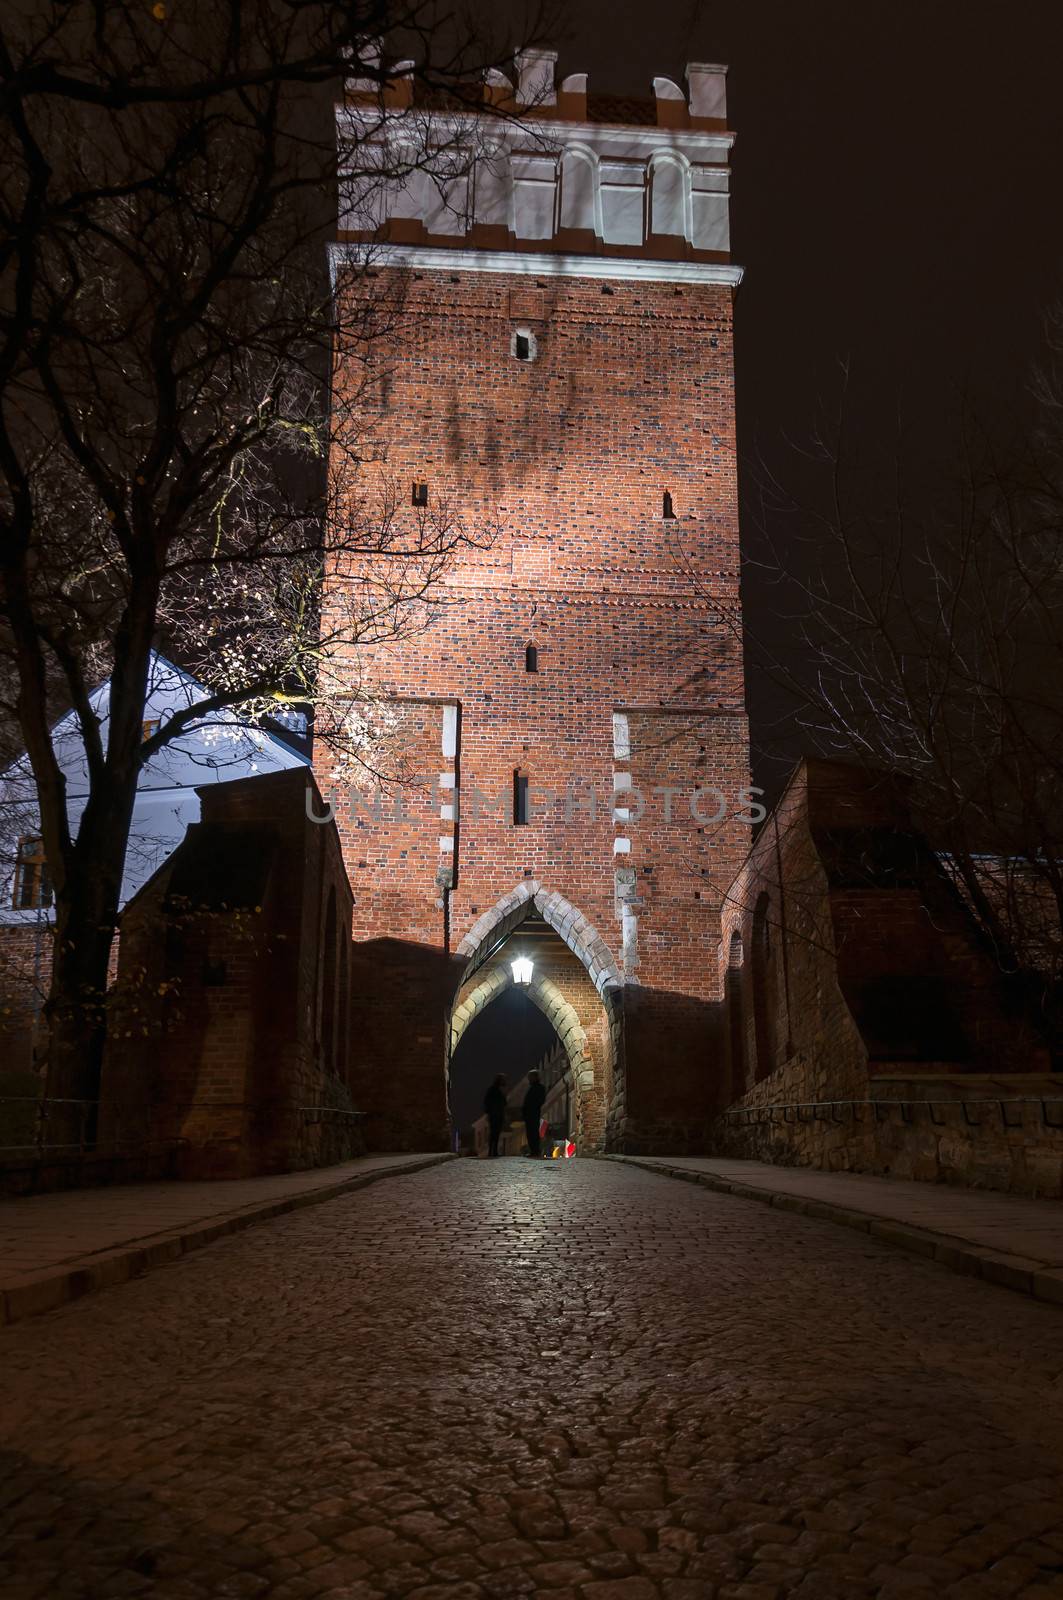 Opatowska gate by night by mkos83